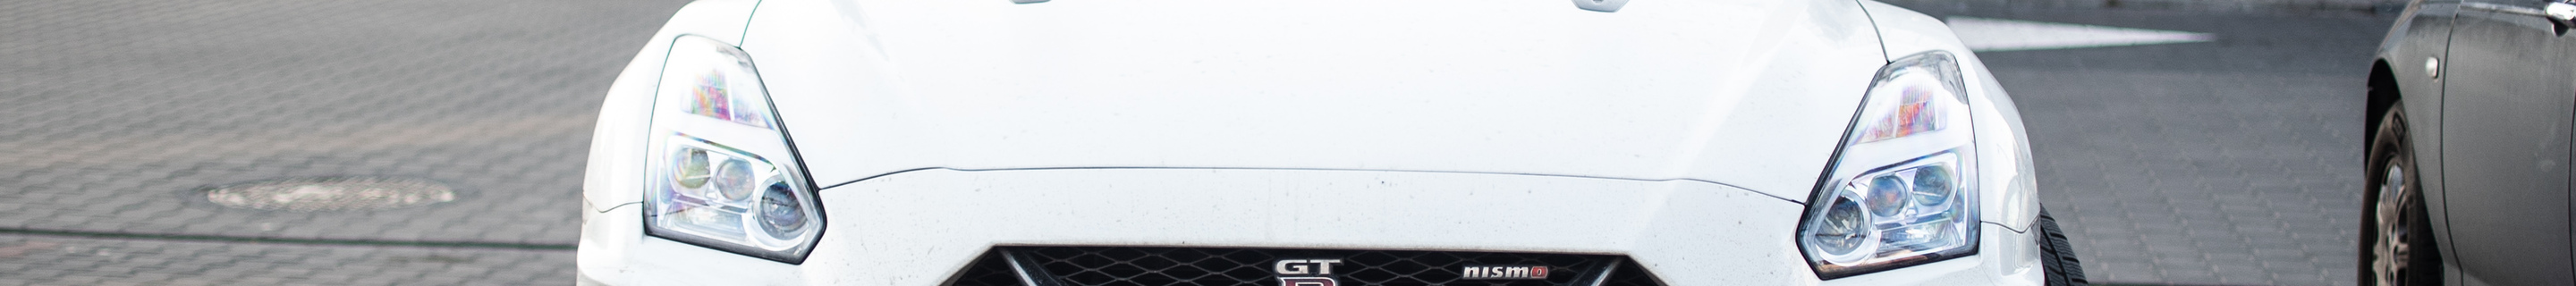 Nissan GT-R 2017 Nismo